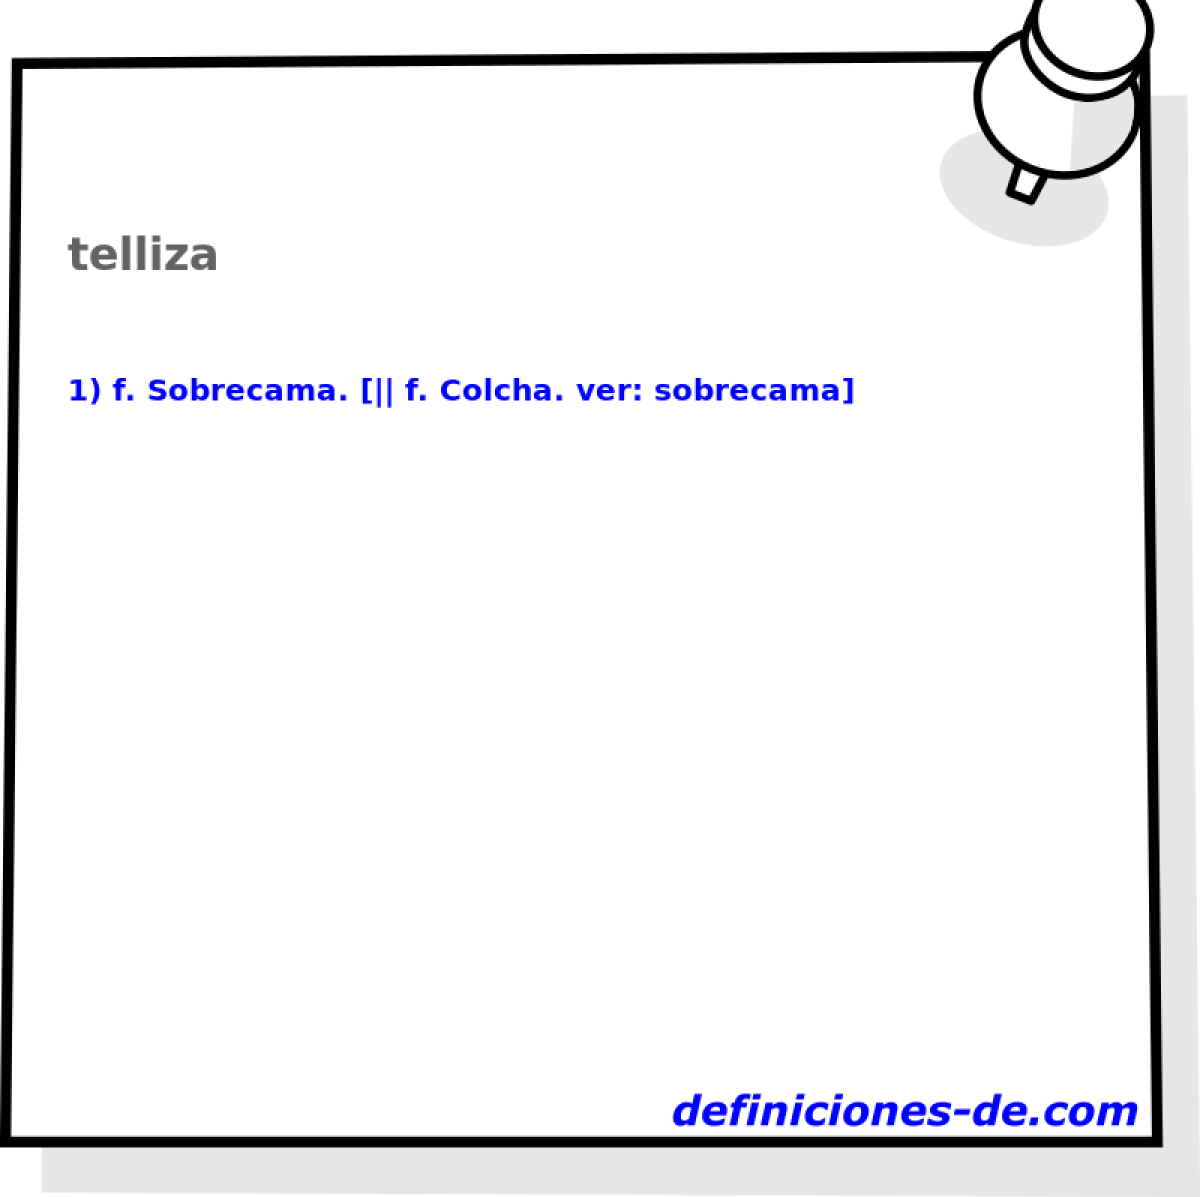 telliza 